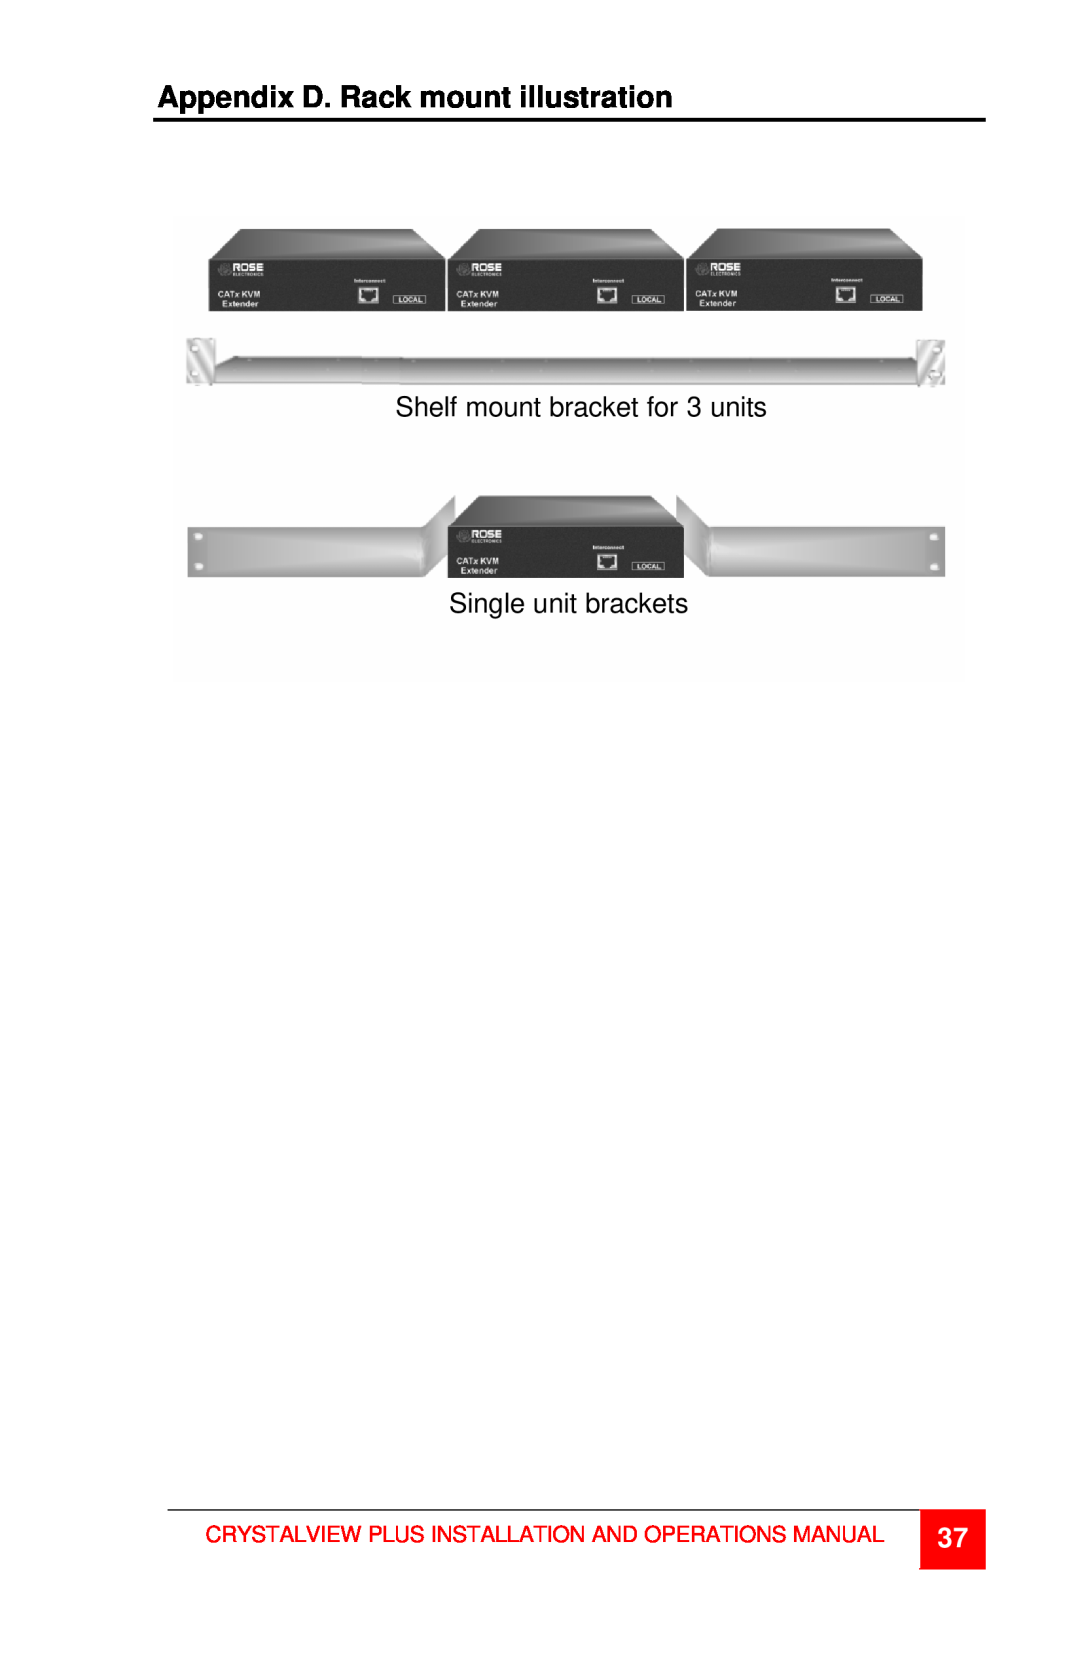 Rose electronic CrystalView Plus Appendix D. Rack mount illustration, Shelf mount bracket for 3 units Single unit brackets 